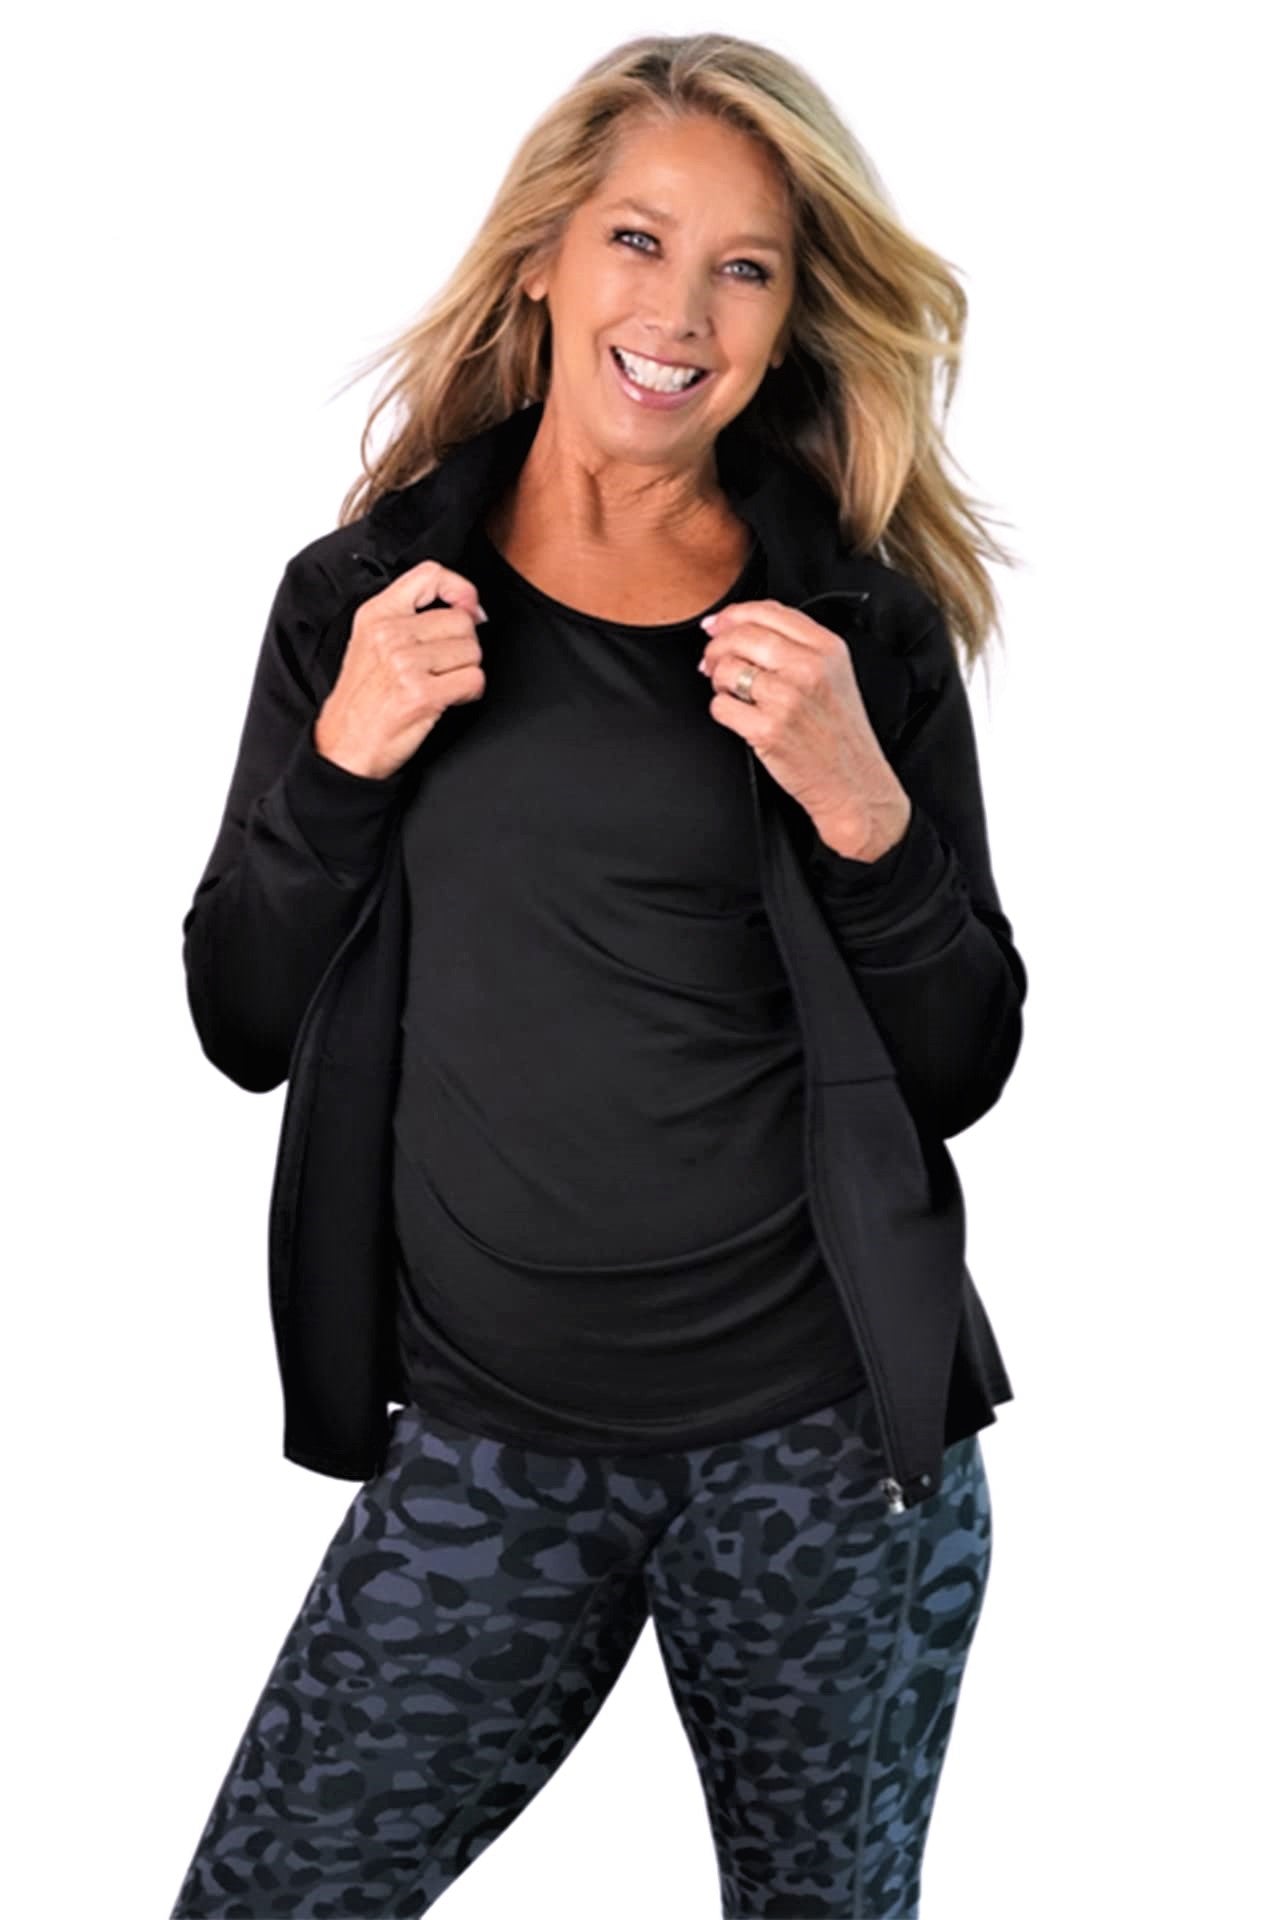 Denise Austin's Full Zip Workout Sports Jacket - Zipper Lightweight Black Hoodie